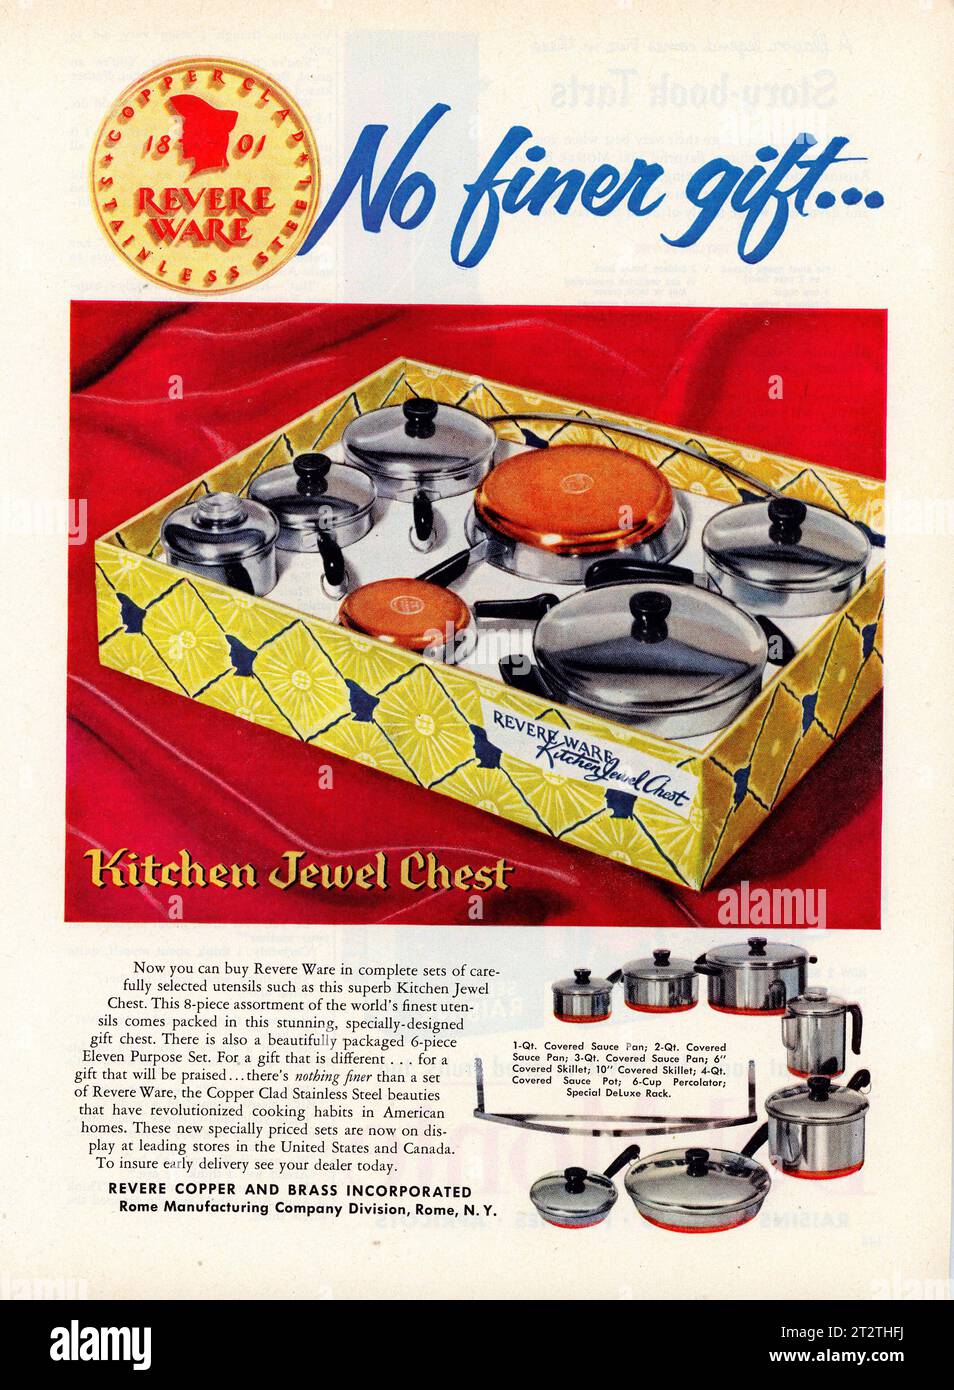 https://c8.alamy.com/comp/2T2THFJ/vintage-good-housekeeping-magazine-november-1953-issue-usa-2T2THFJ.jpg